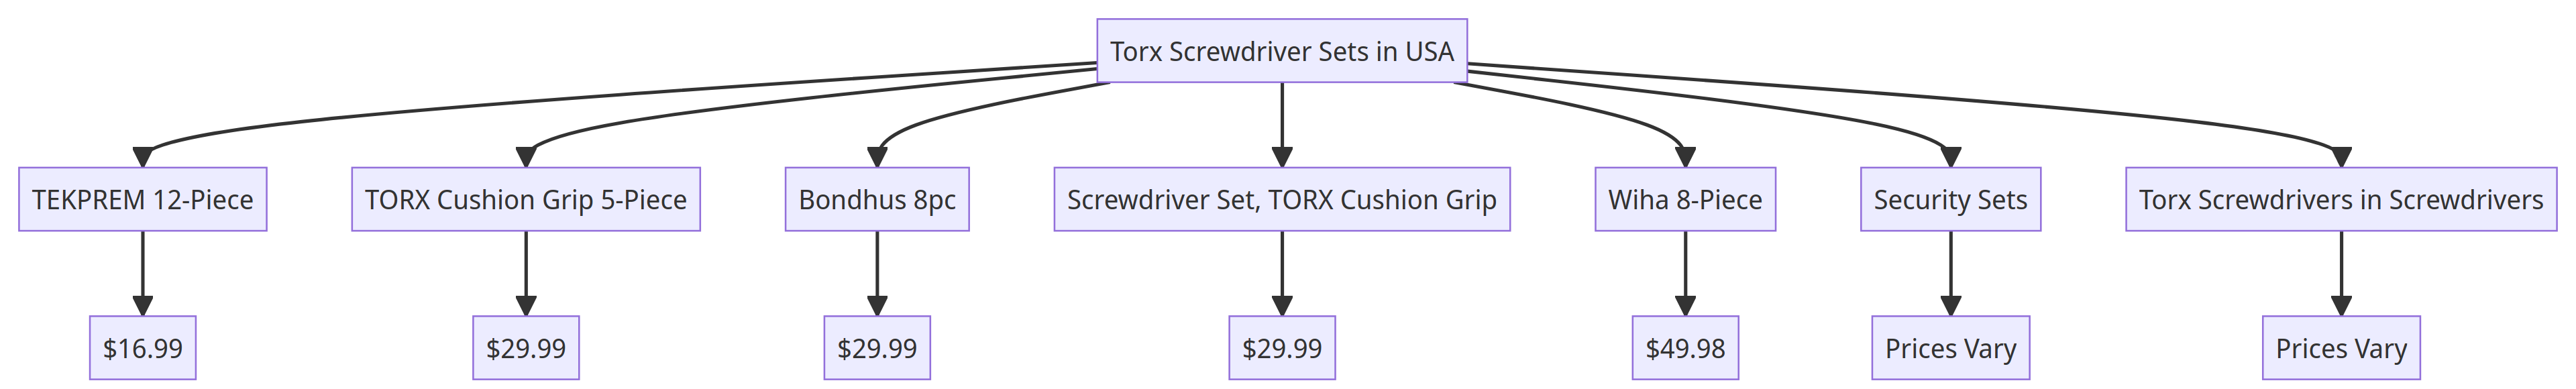 Flowchart of Torx Screwdriver Sets